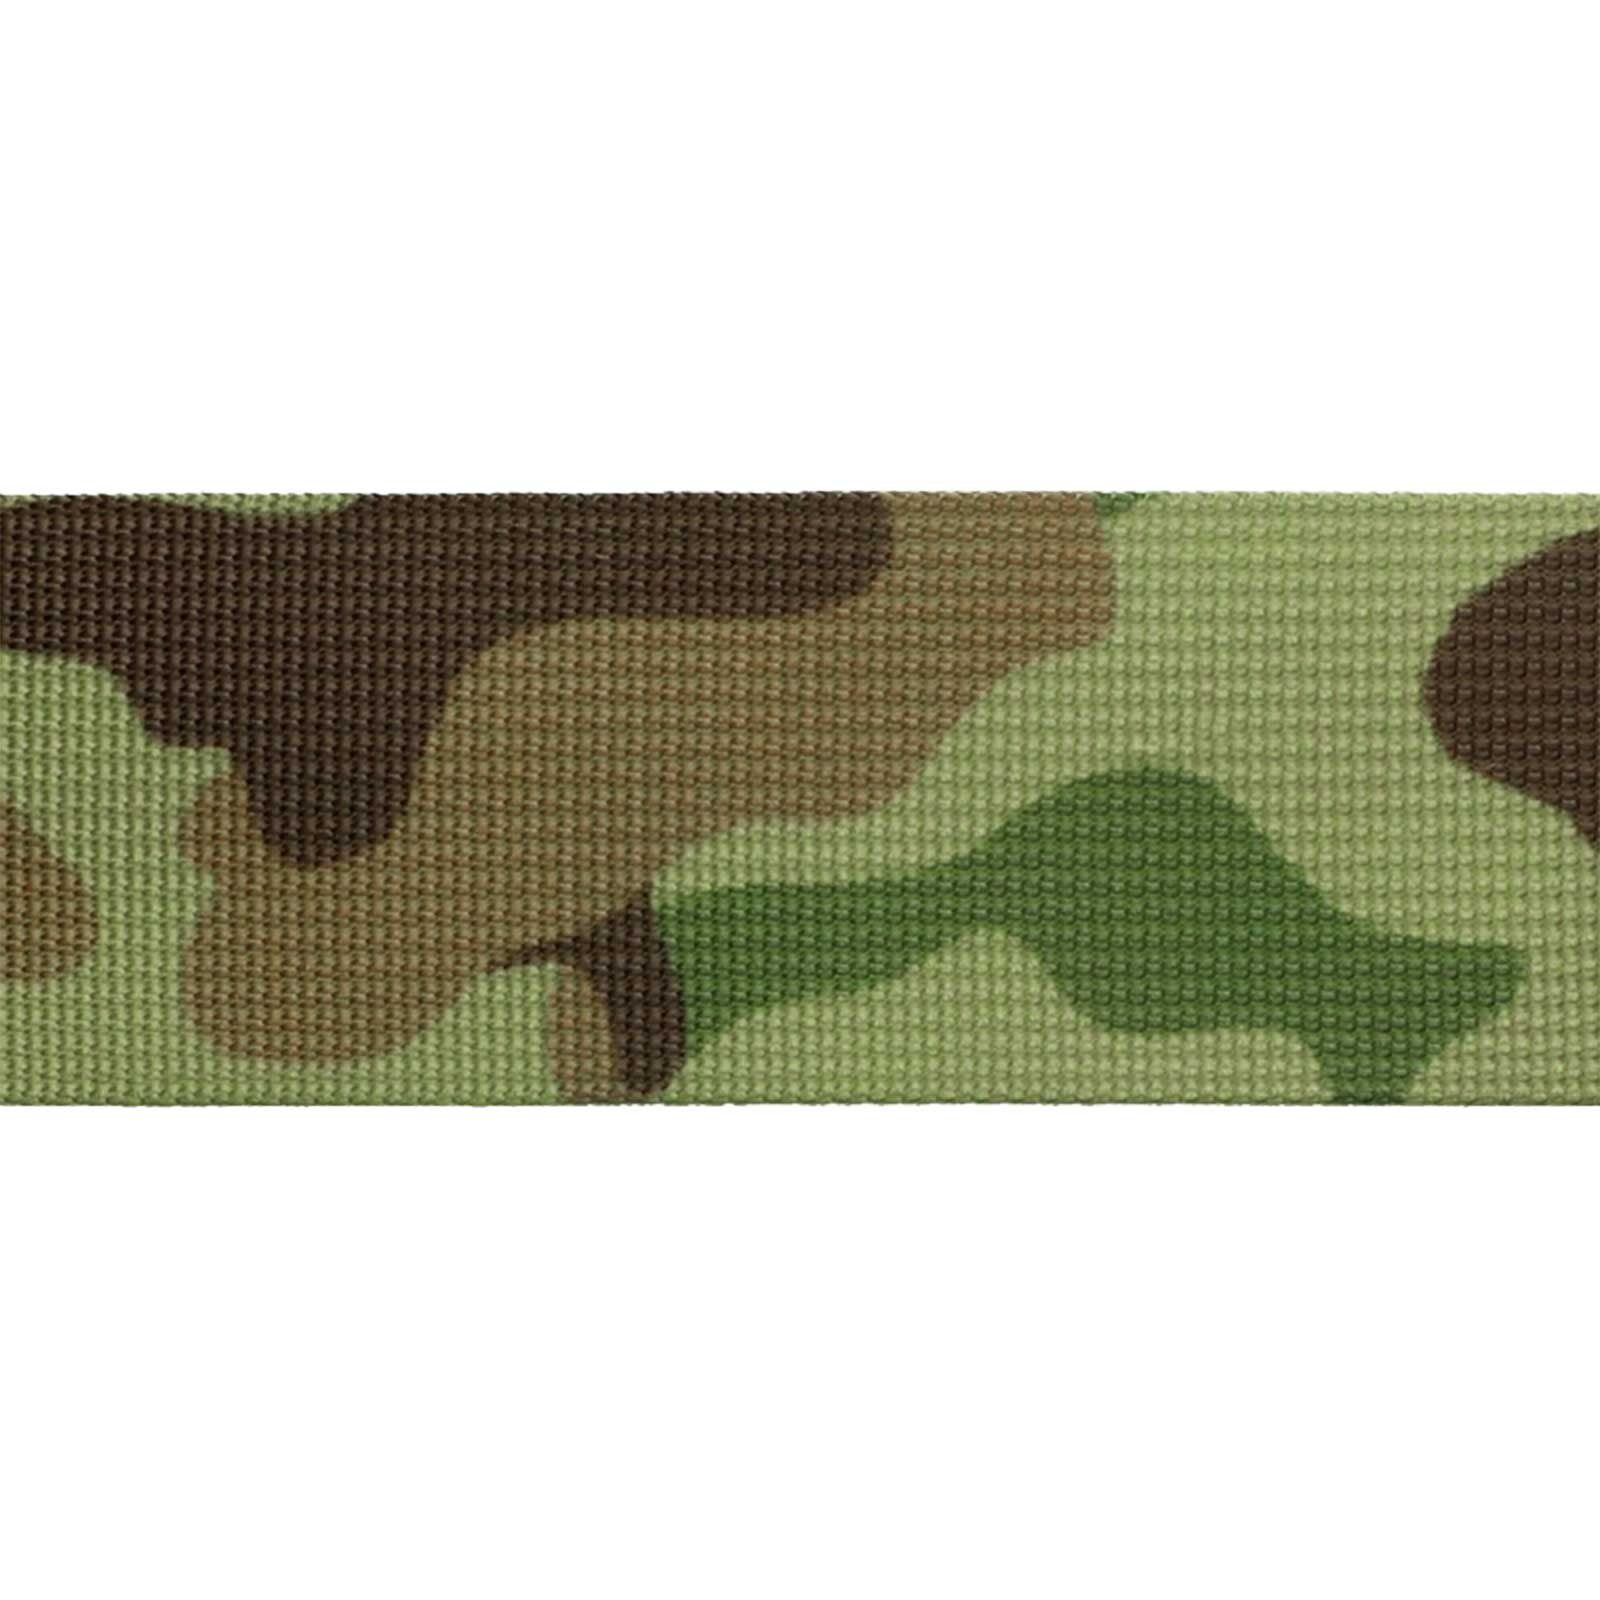 Gurtband Design Rollladengurt, Tarnmuster im 50m camouflage maDDma